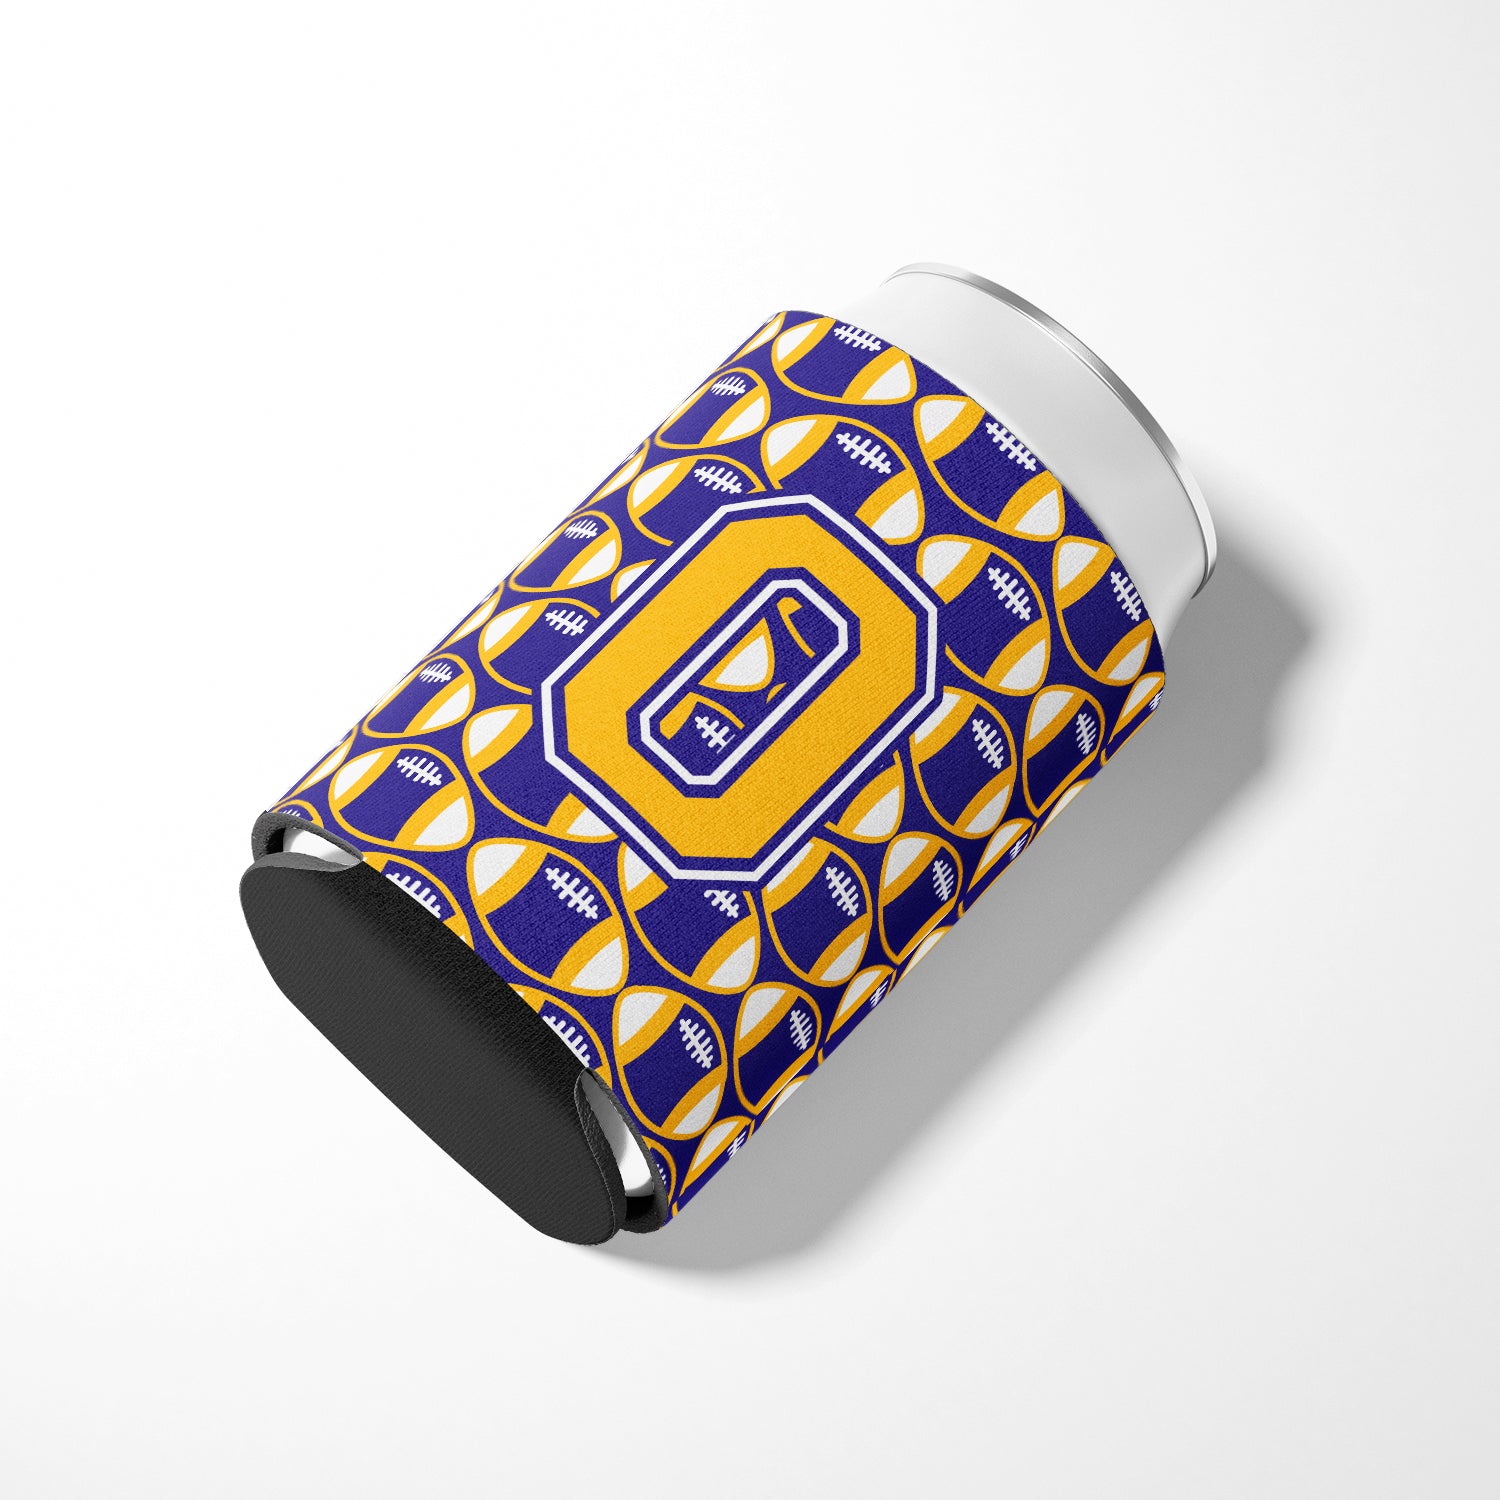 Letter O Football Purple and Gold Can or Bottle Hugger CJ1064-OCC.